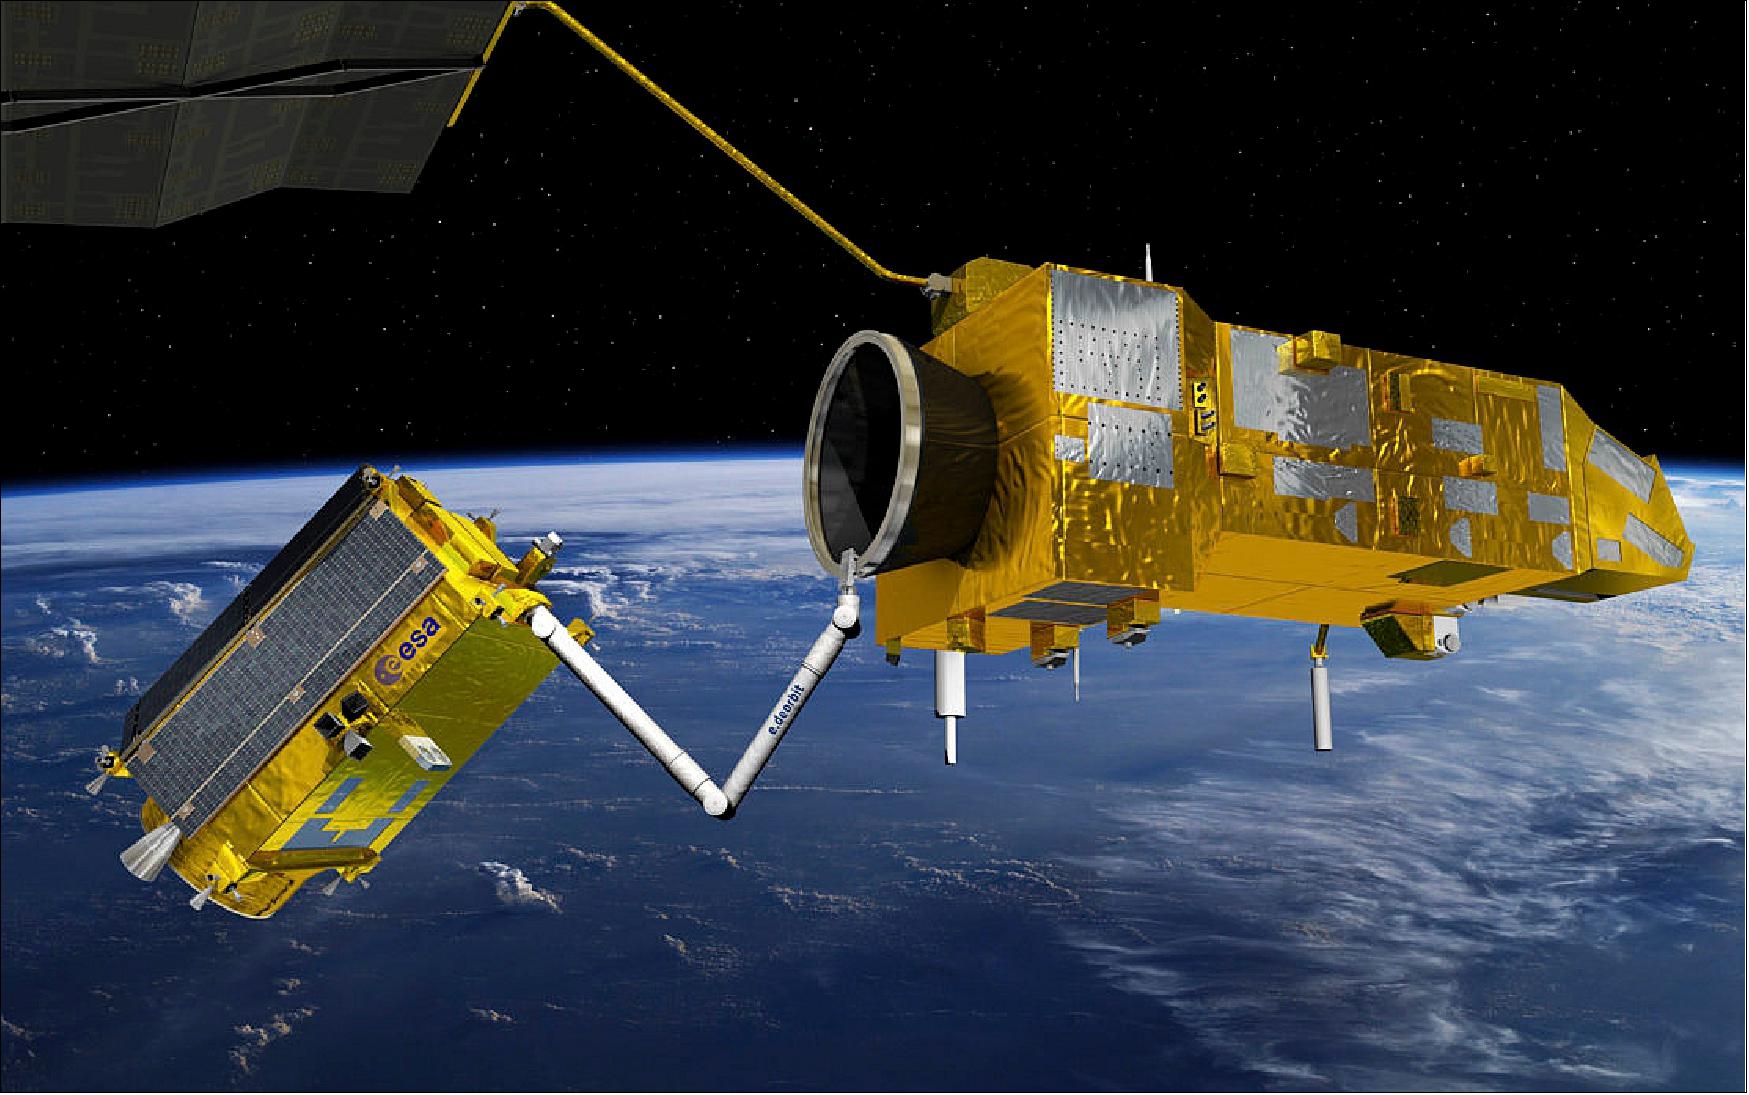 Figure 51: Artist's rendition of ESA’s proposed e.Deorbit mission, shown left, using a robotic arm to catch a derelict satellite (image credit: ESA, David Ducros, 2016)